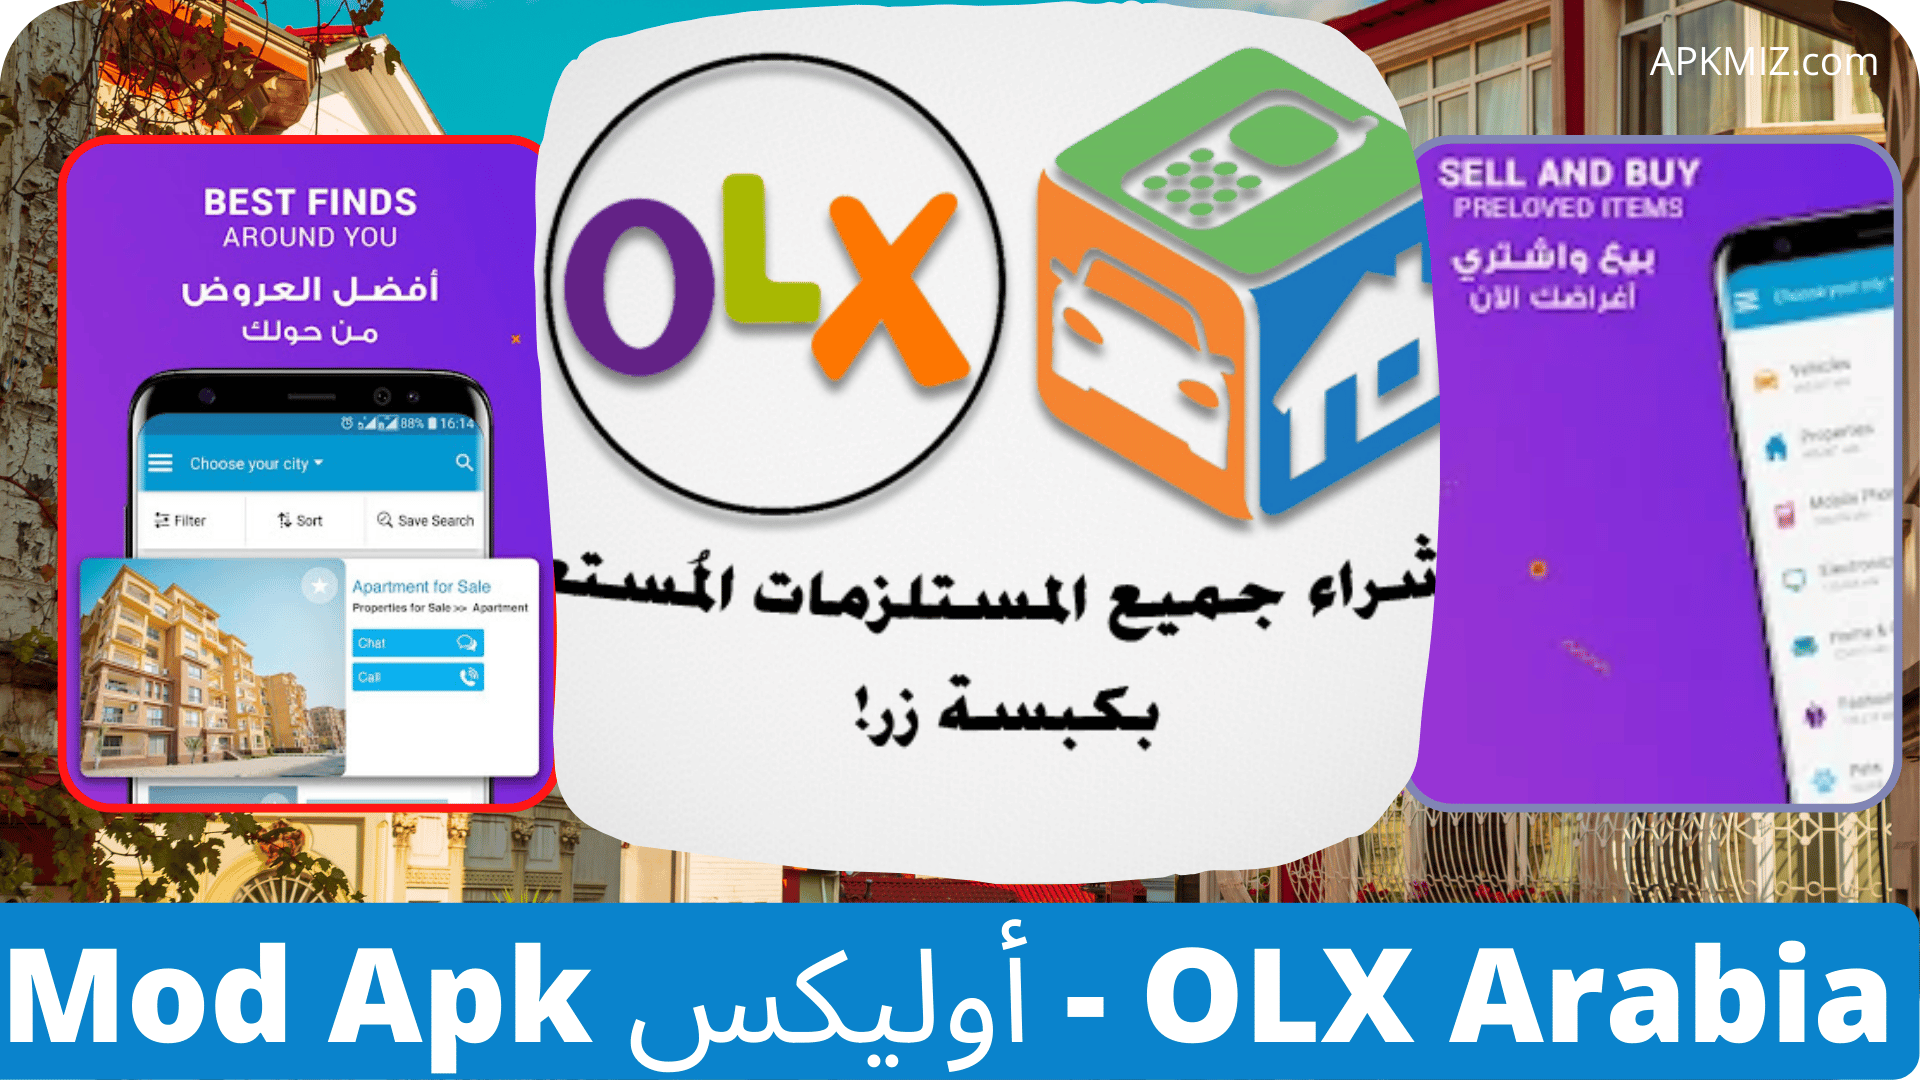 OLX Arabia - أوليكس Mod Apk